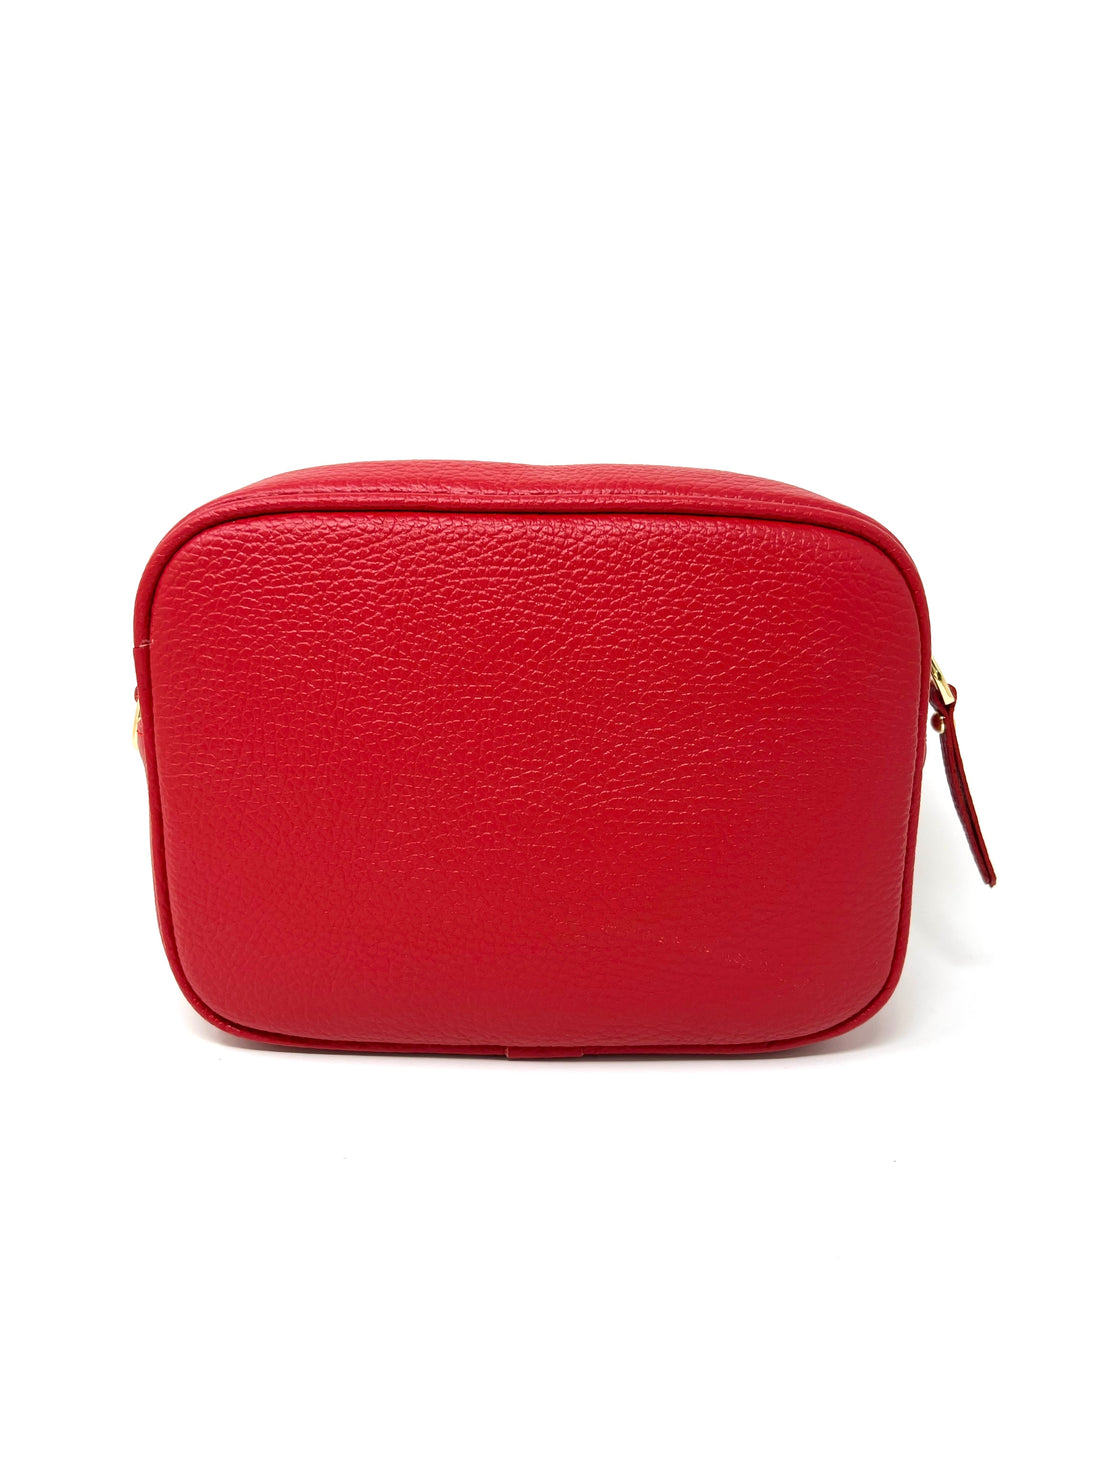 Firenze Bag in Red